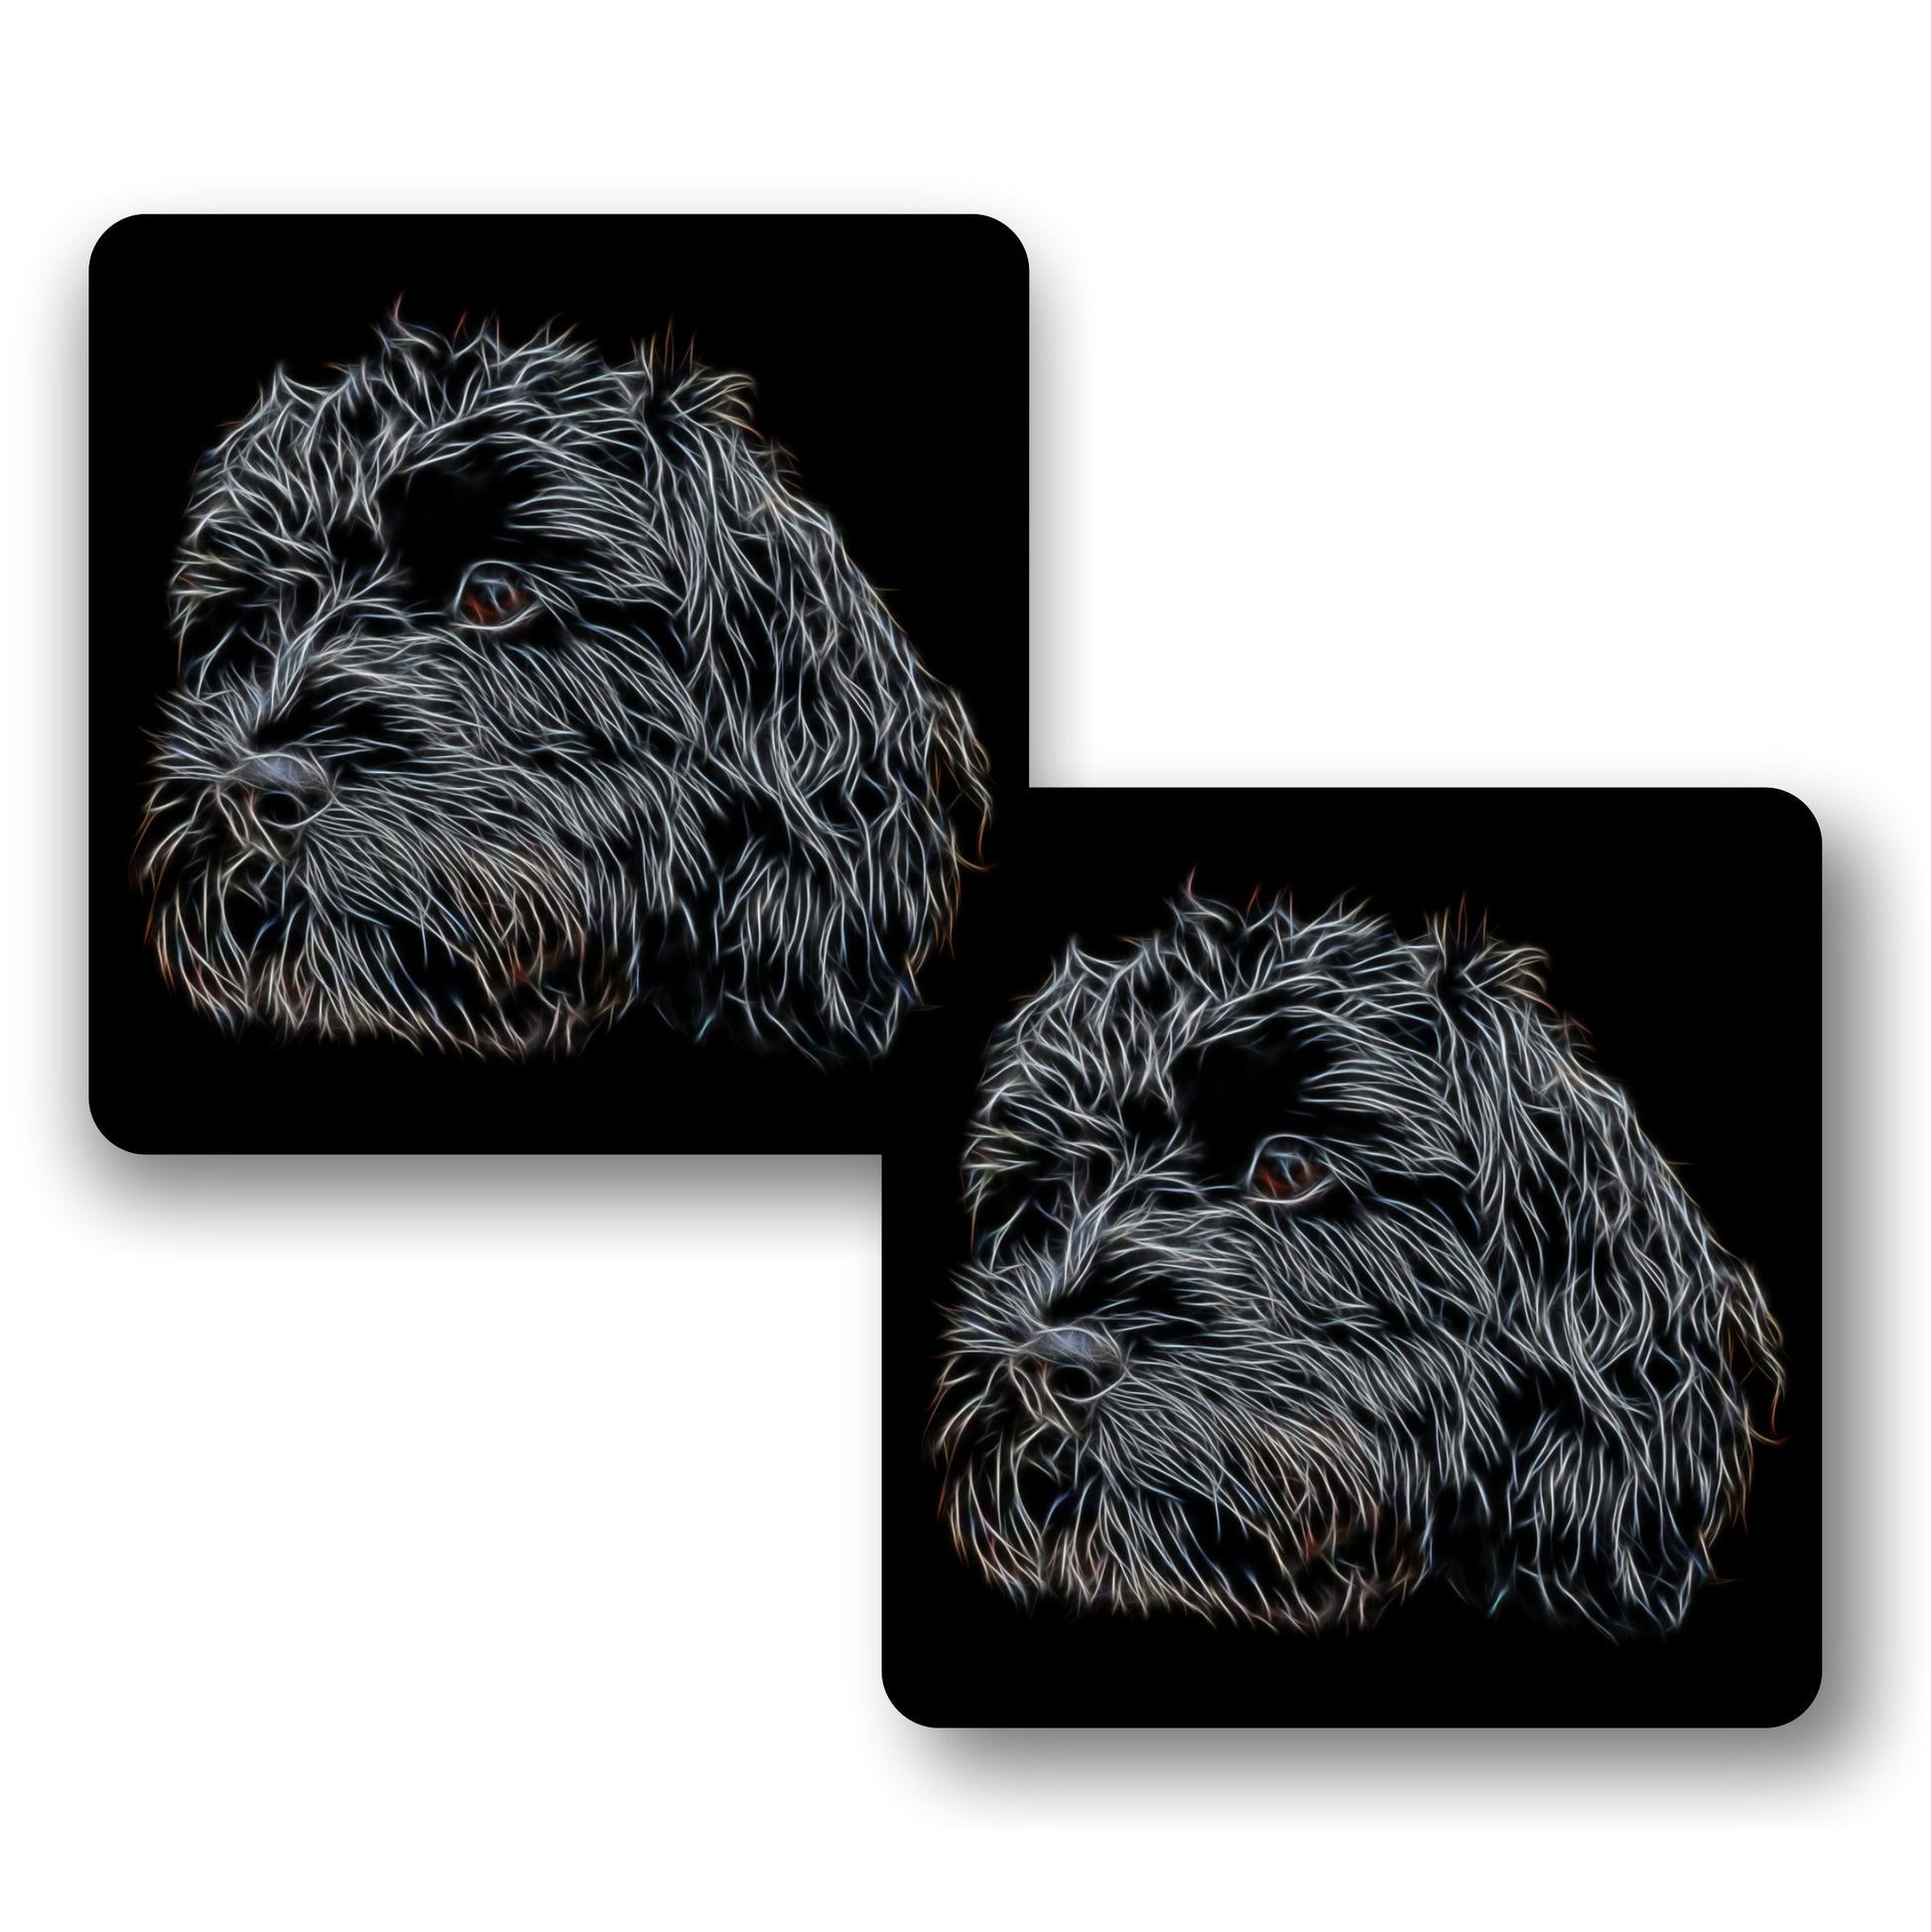 Black Cavapoo Coasters, Set of 2, with Stunning Fractal Art Design.